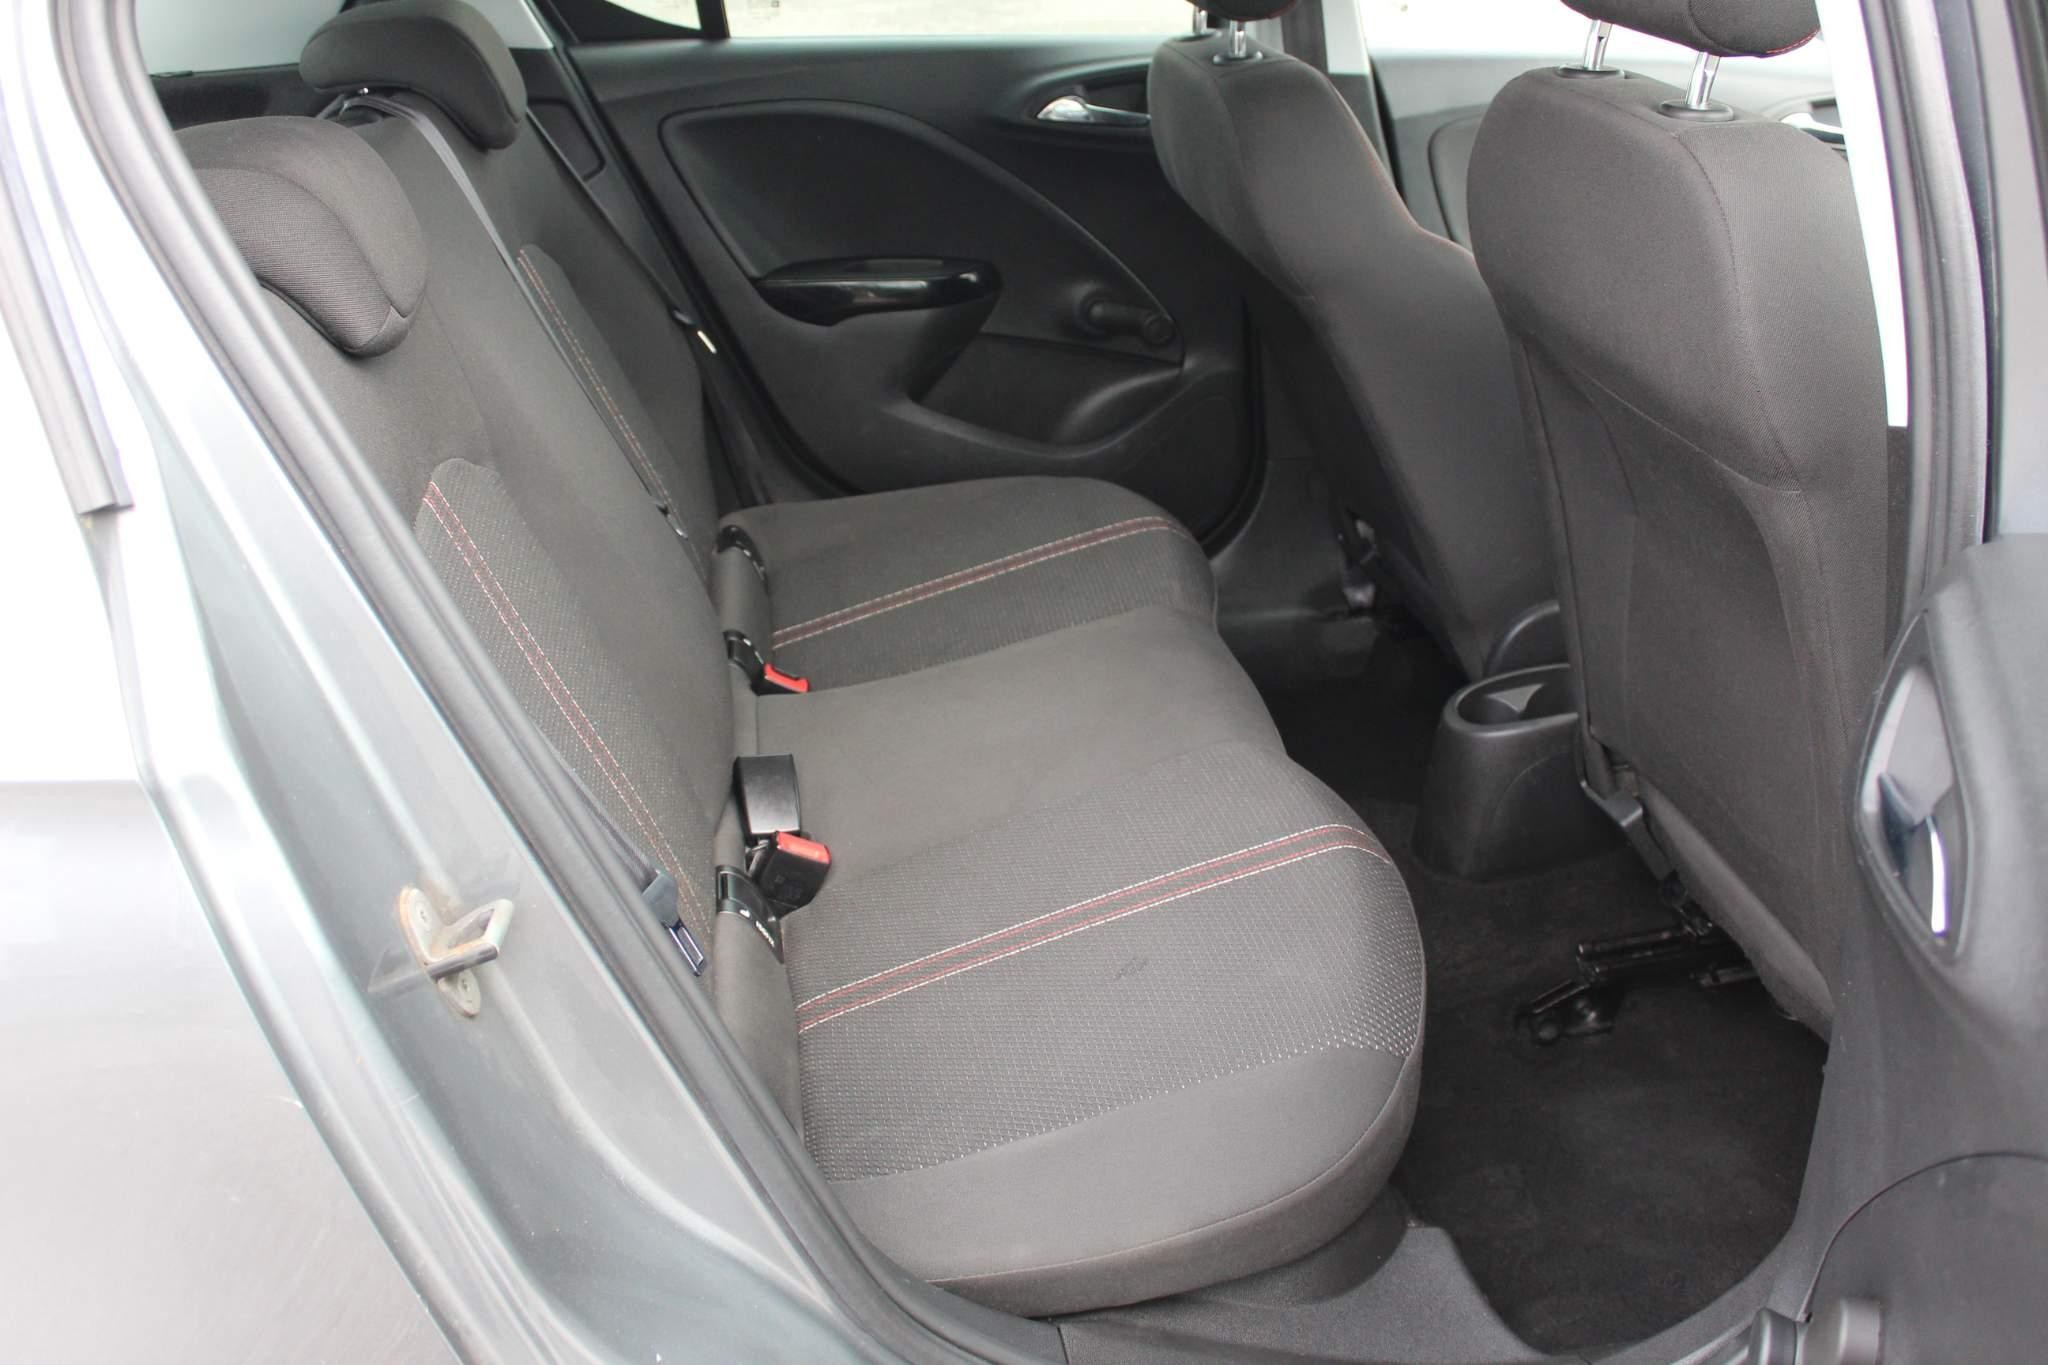 Vauxhall Corsa 1.4 SRi Vx-line Nav Black 5dr (DT19DLO) image 19